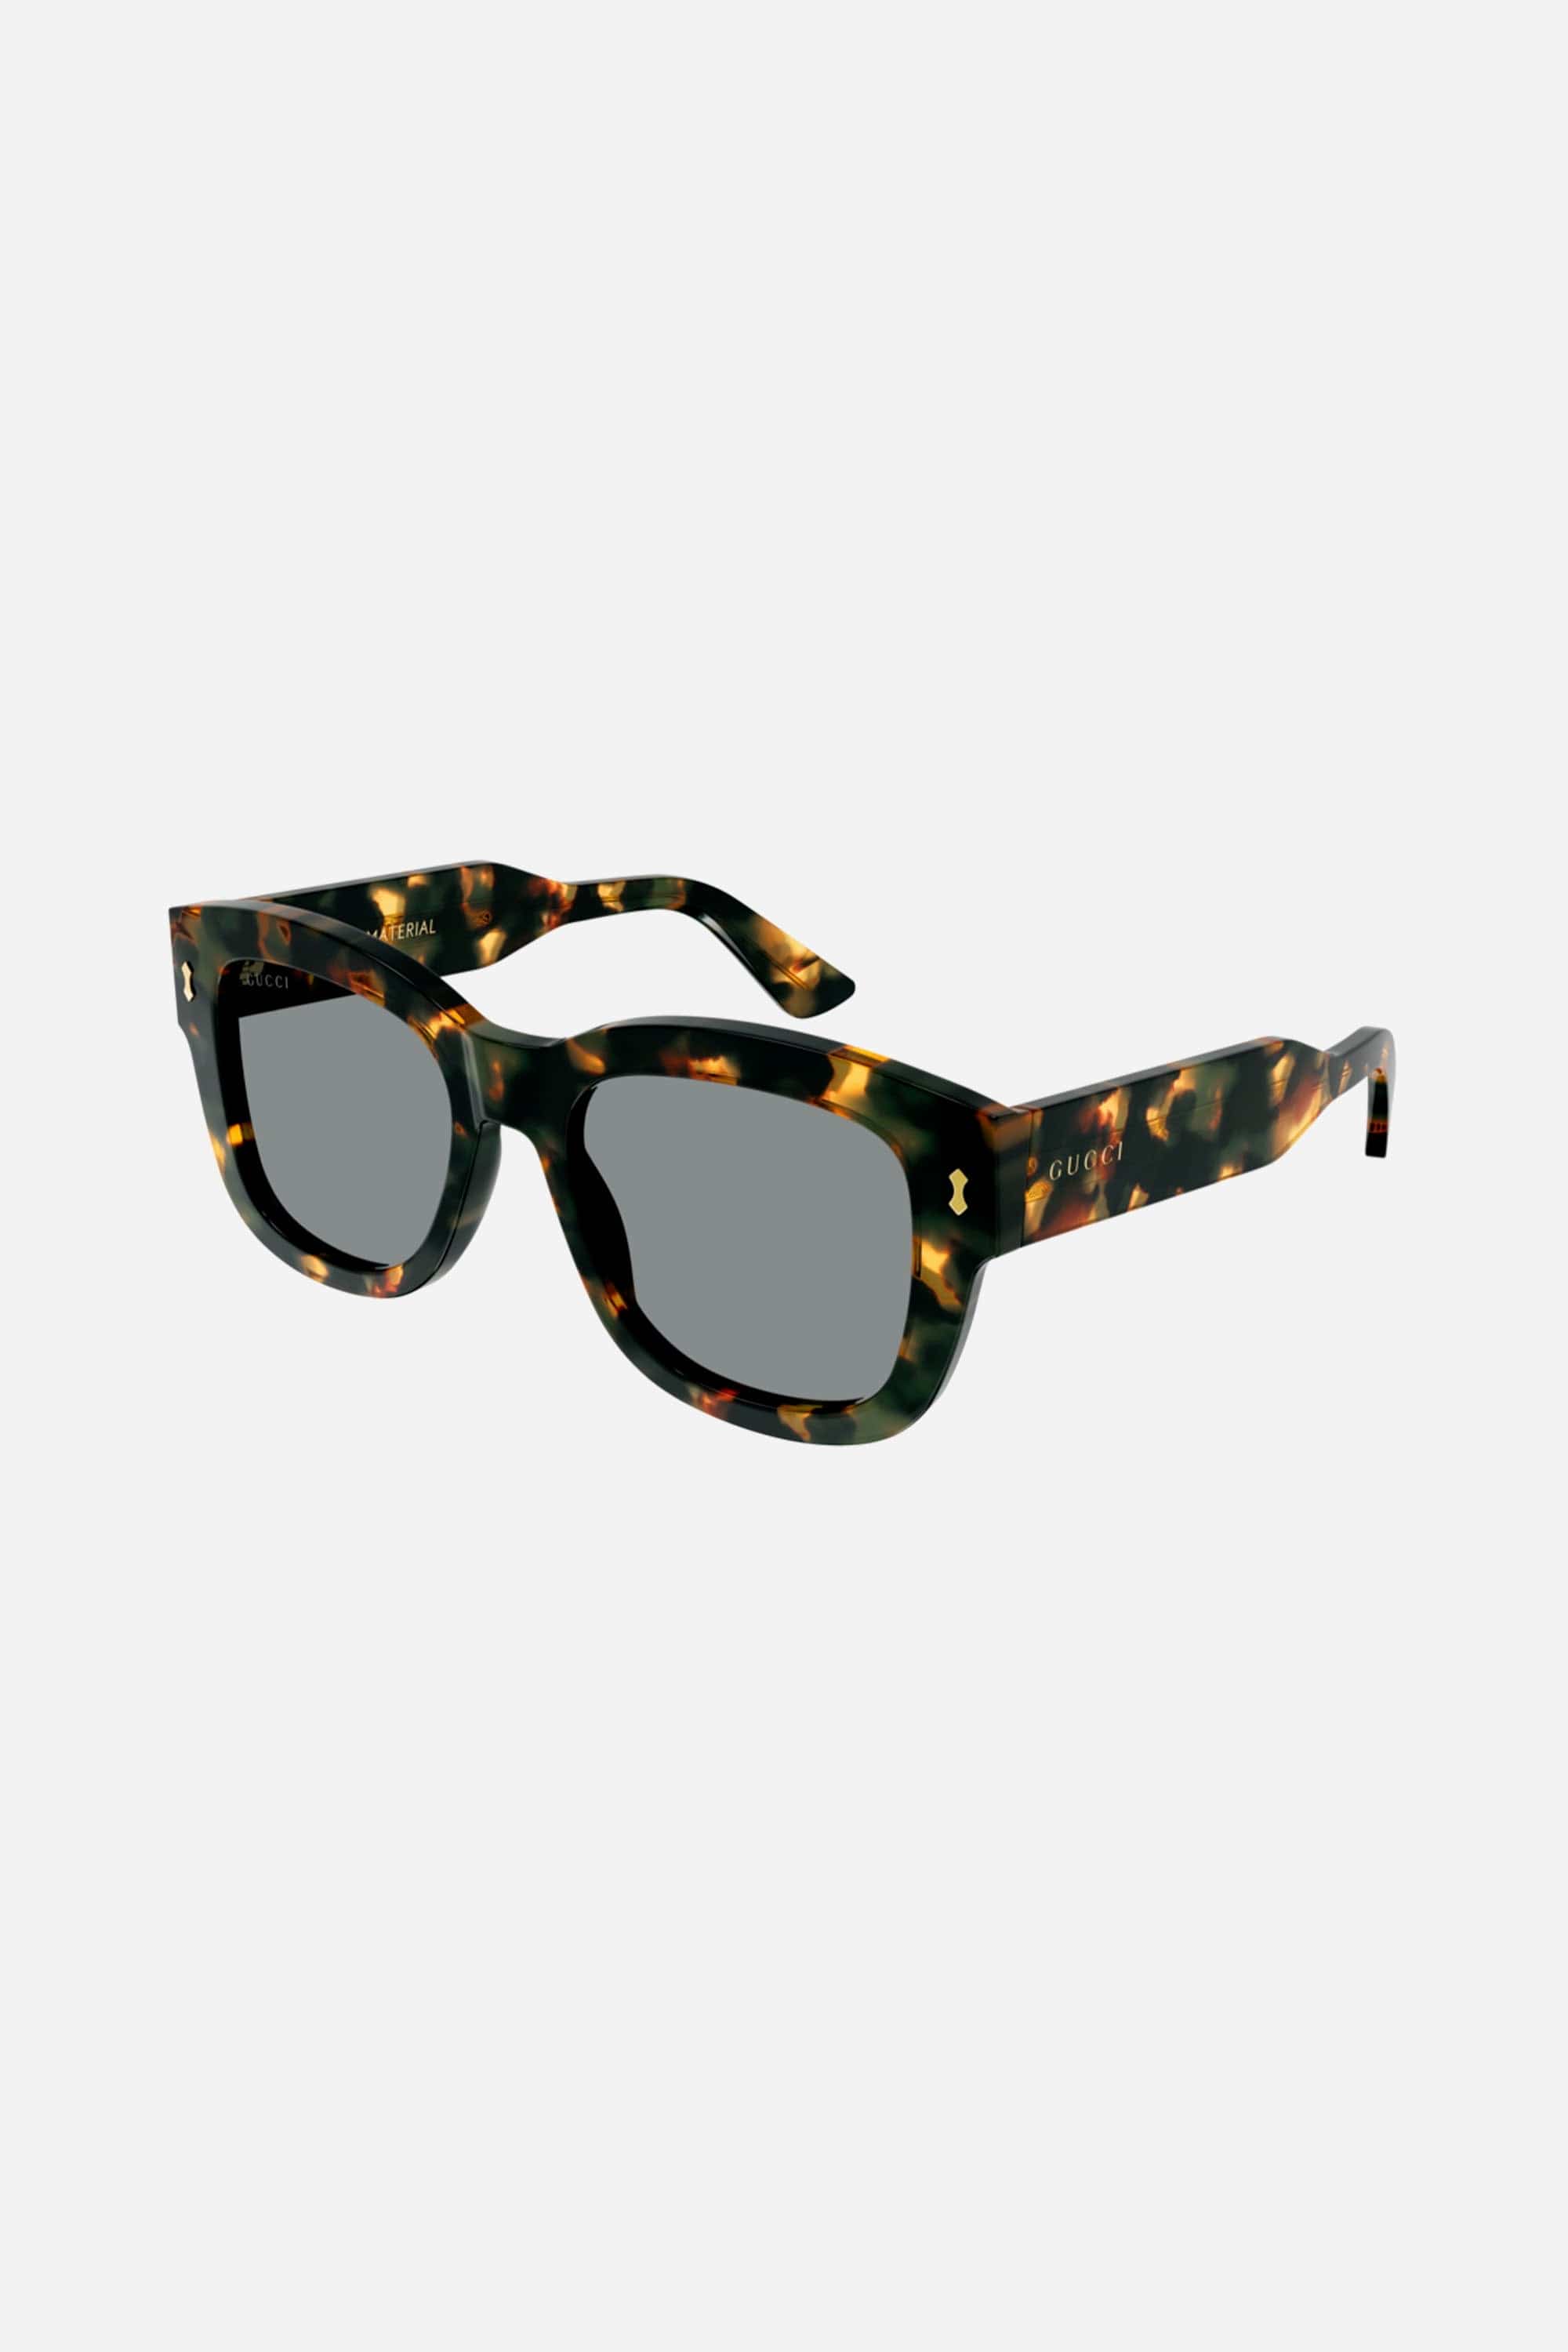 Gucci squared sustainable havana sunglasses - Eyewear Club